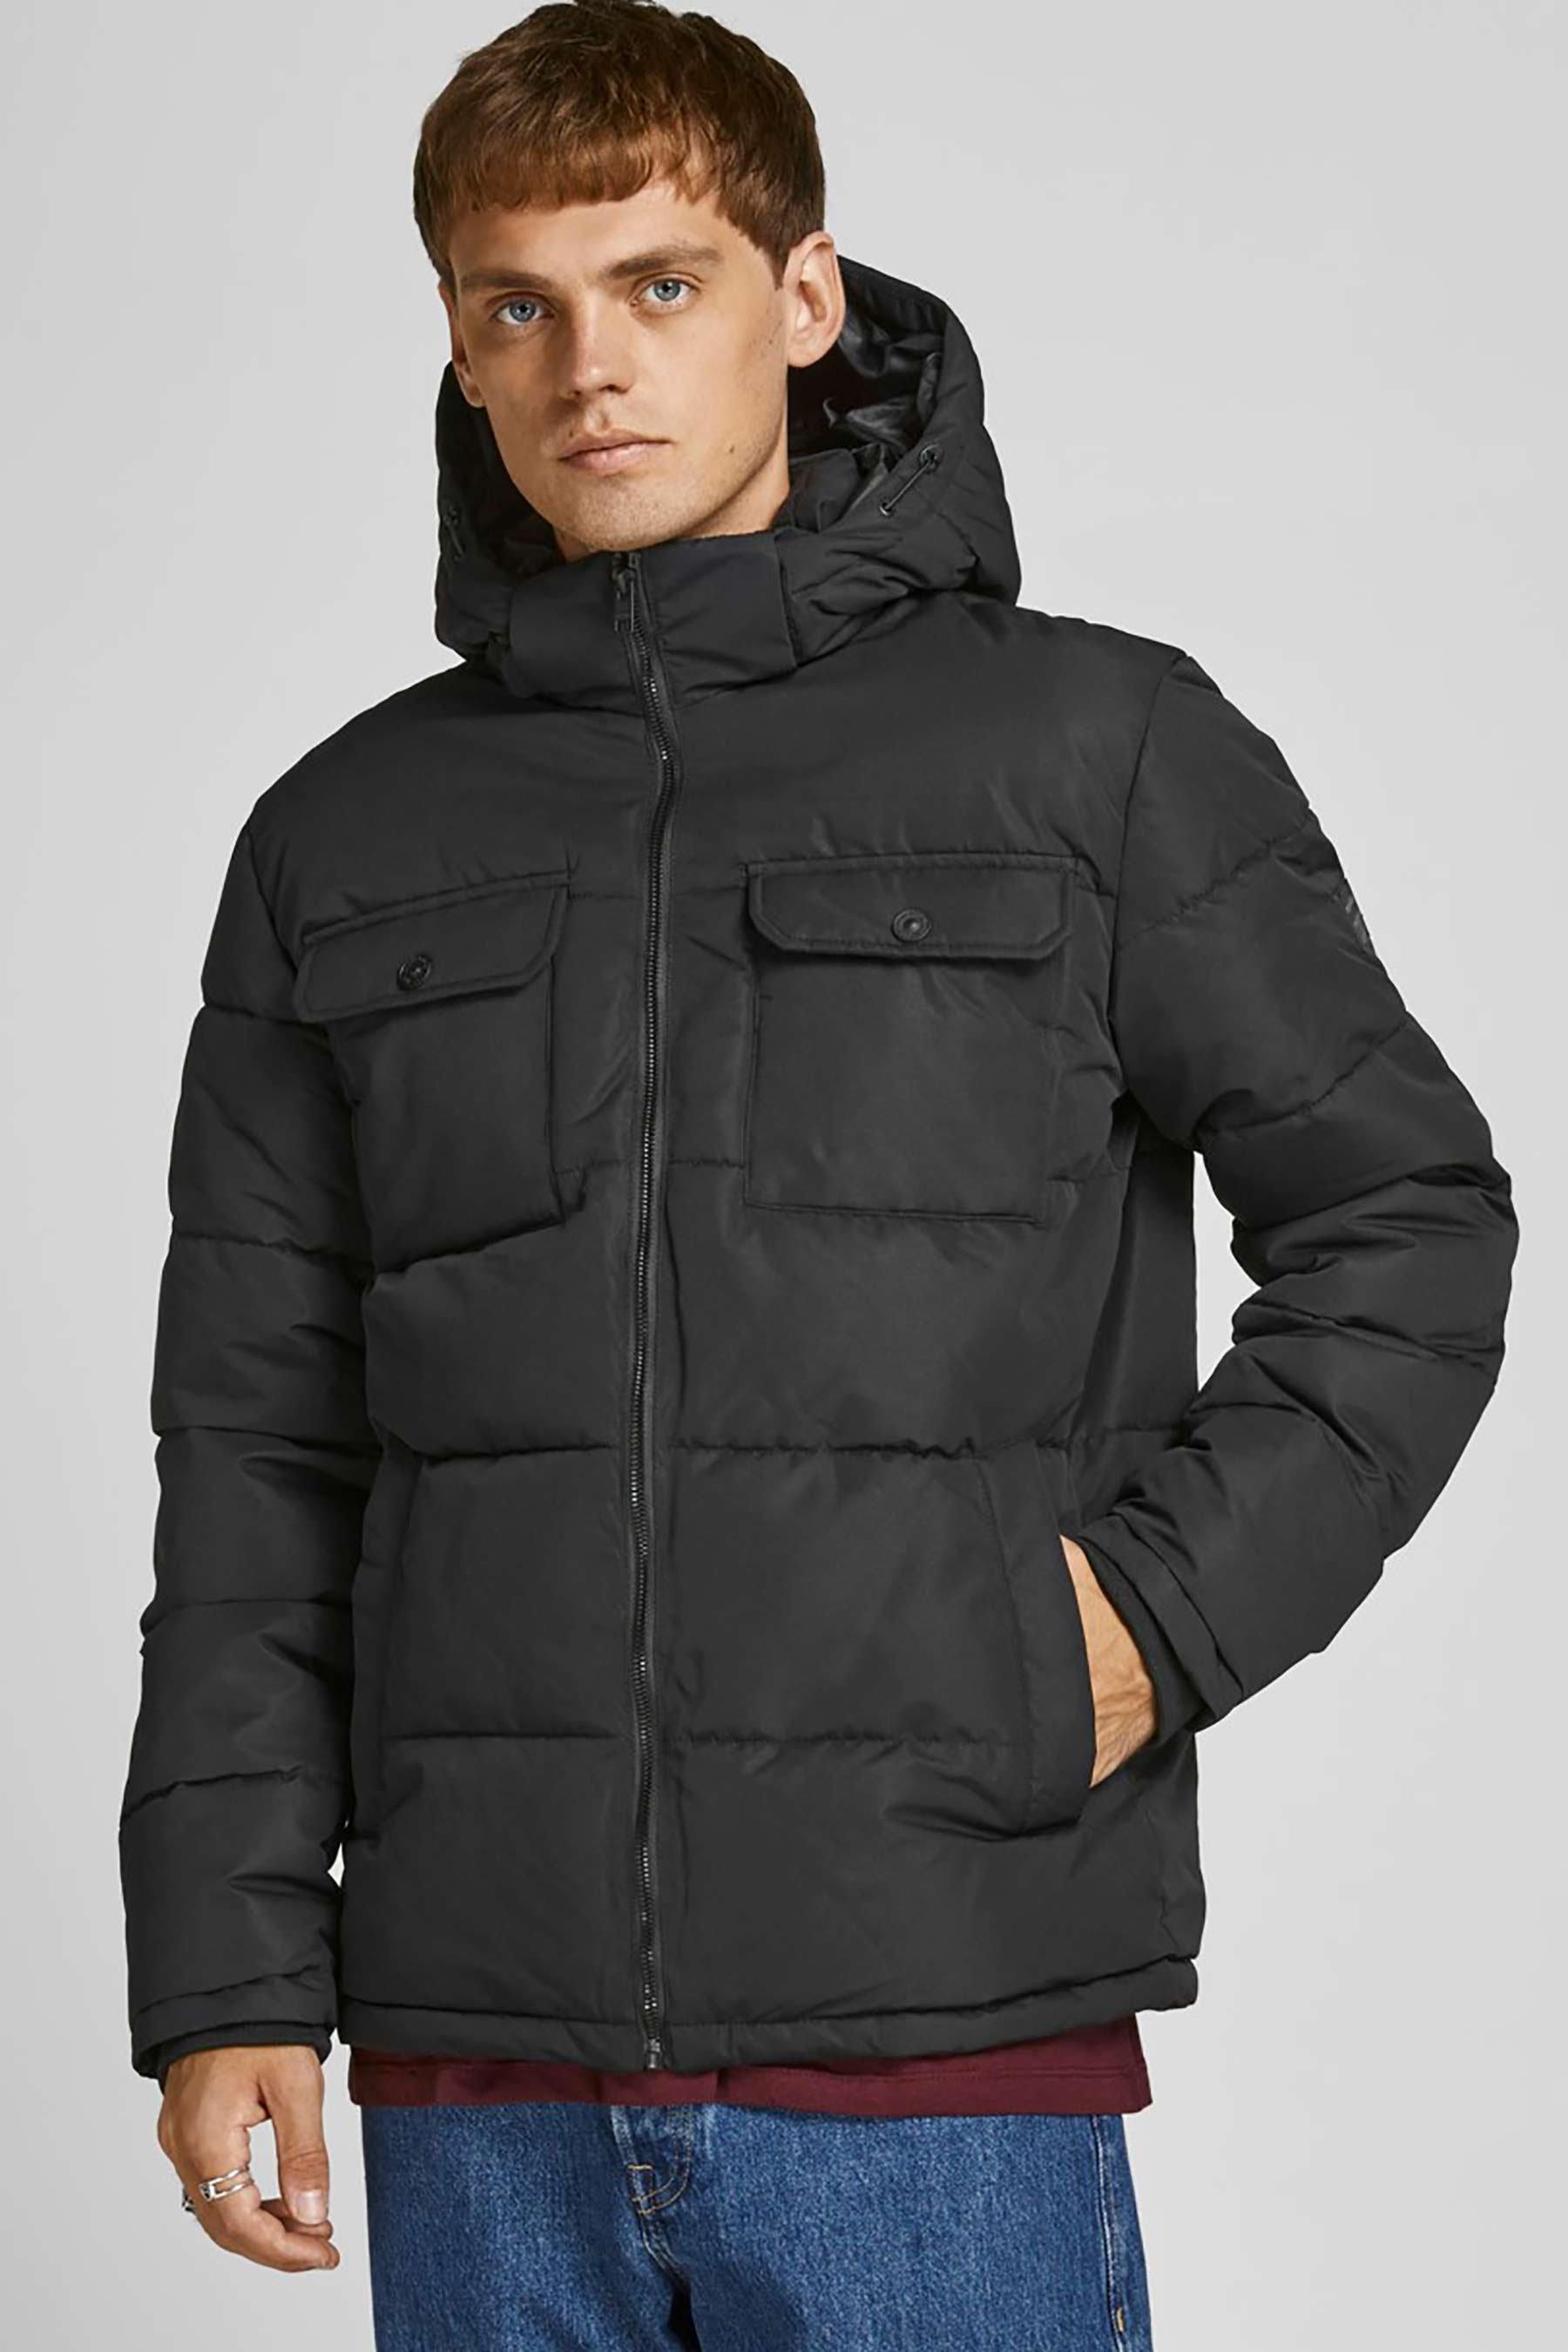 jack and jones pocket padded jacket - mens - black - size: small